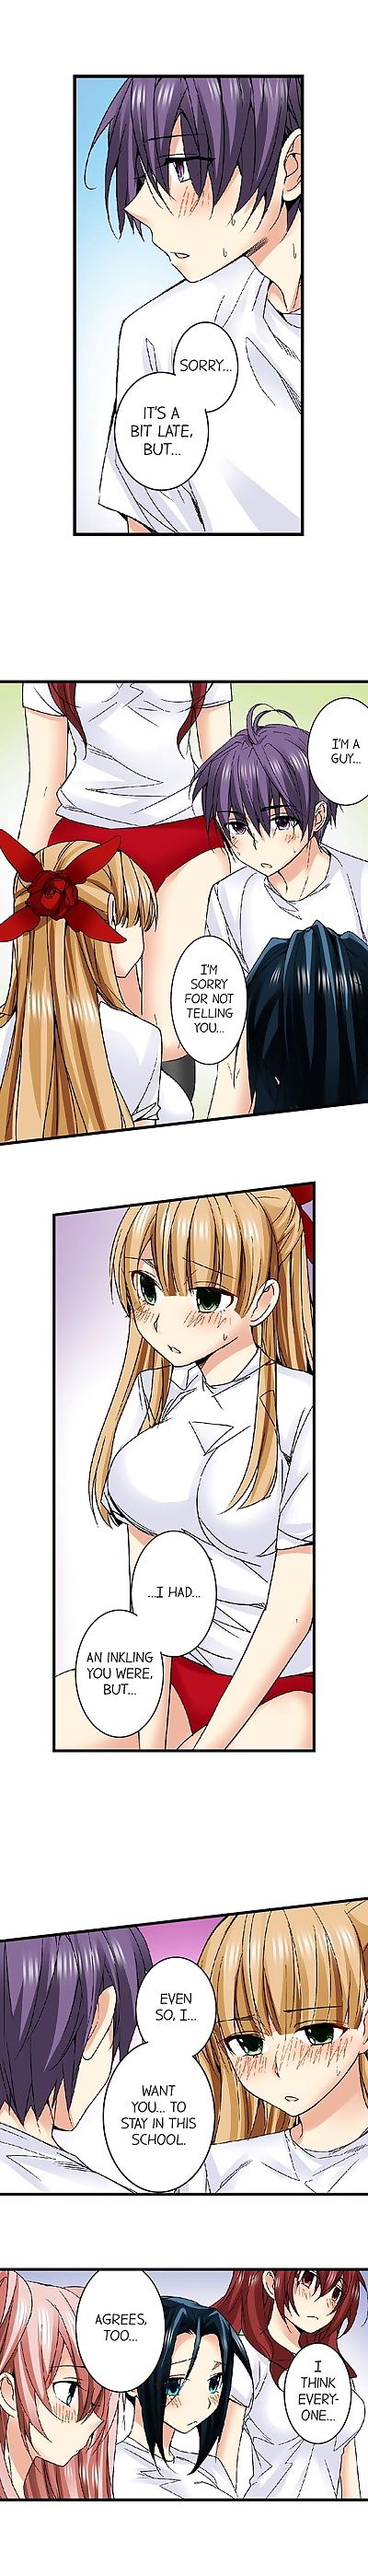 english manga Sneaked Into A Horny Girls School.., full color  manga